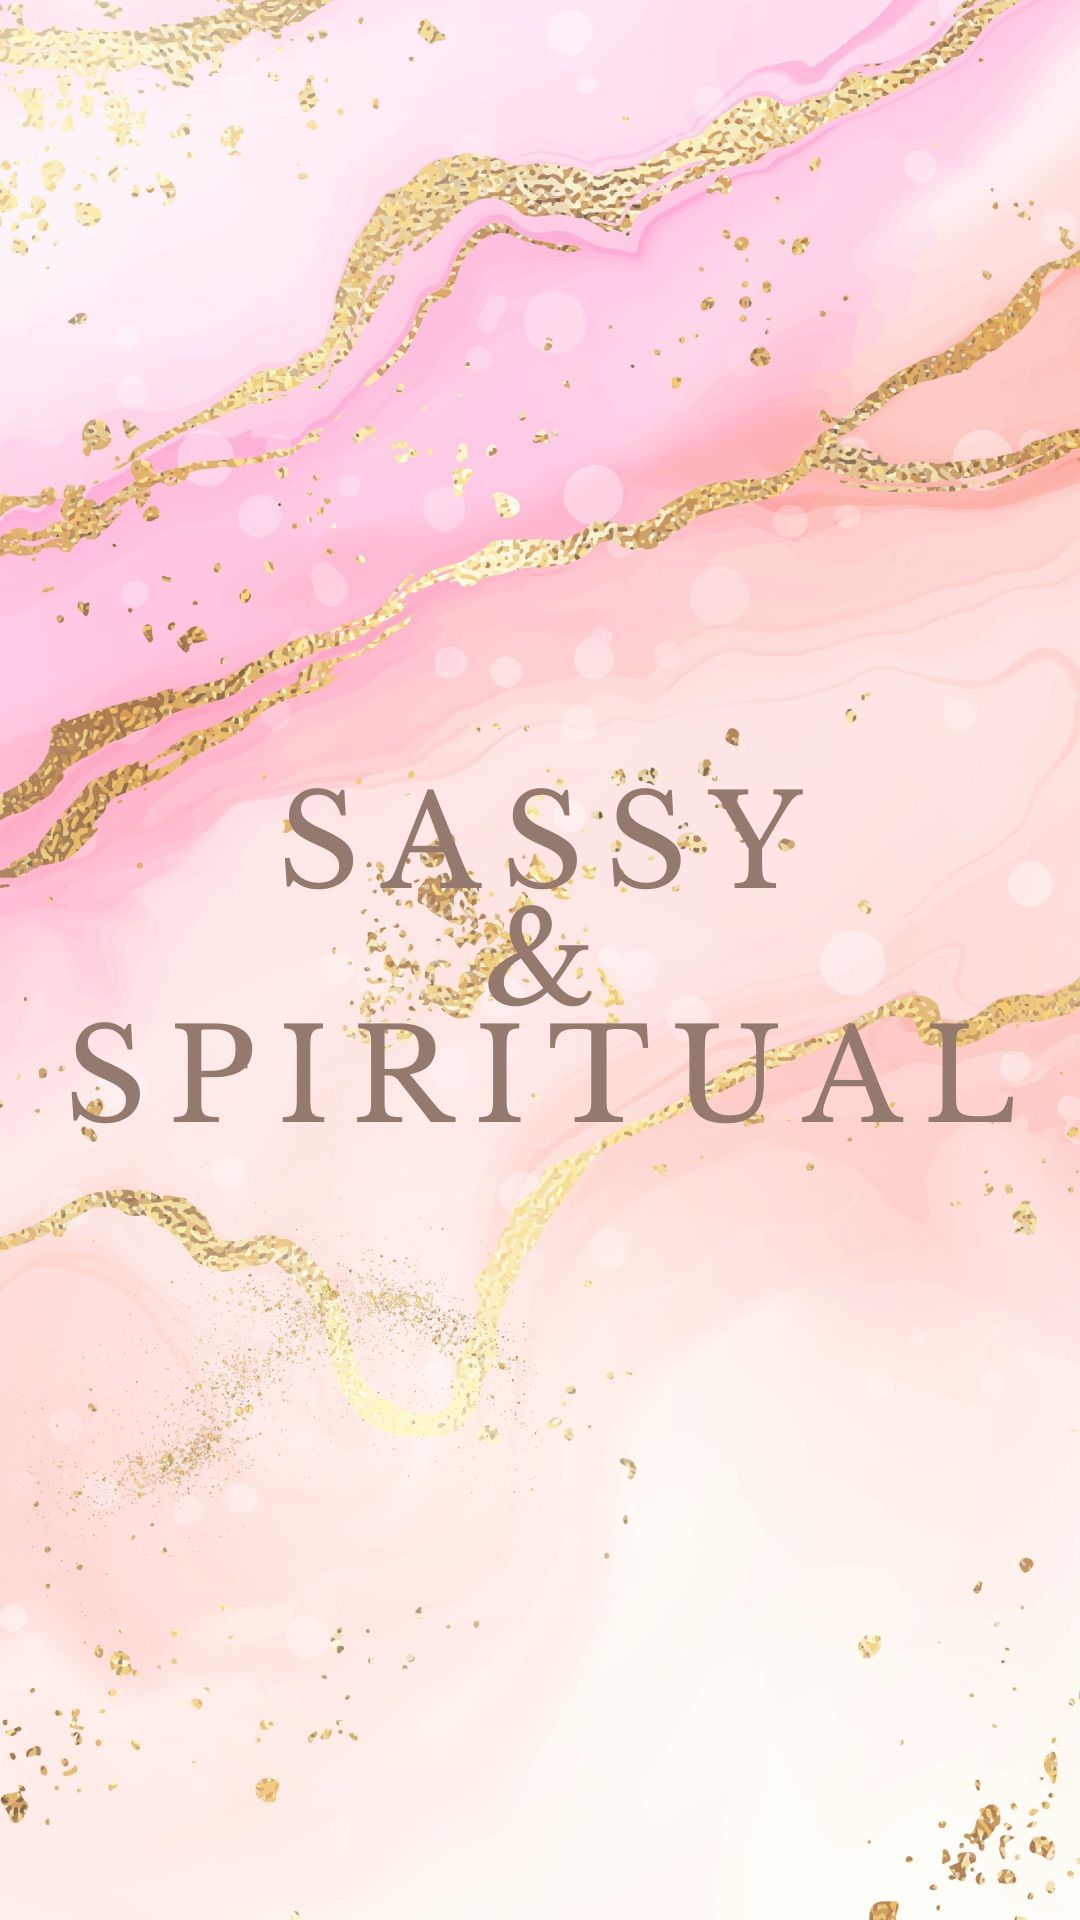 Sassy & Spiritual